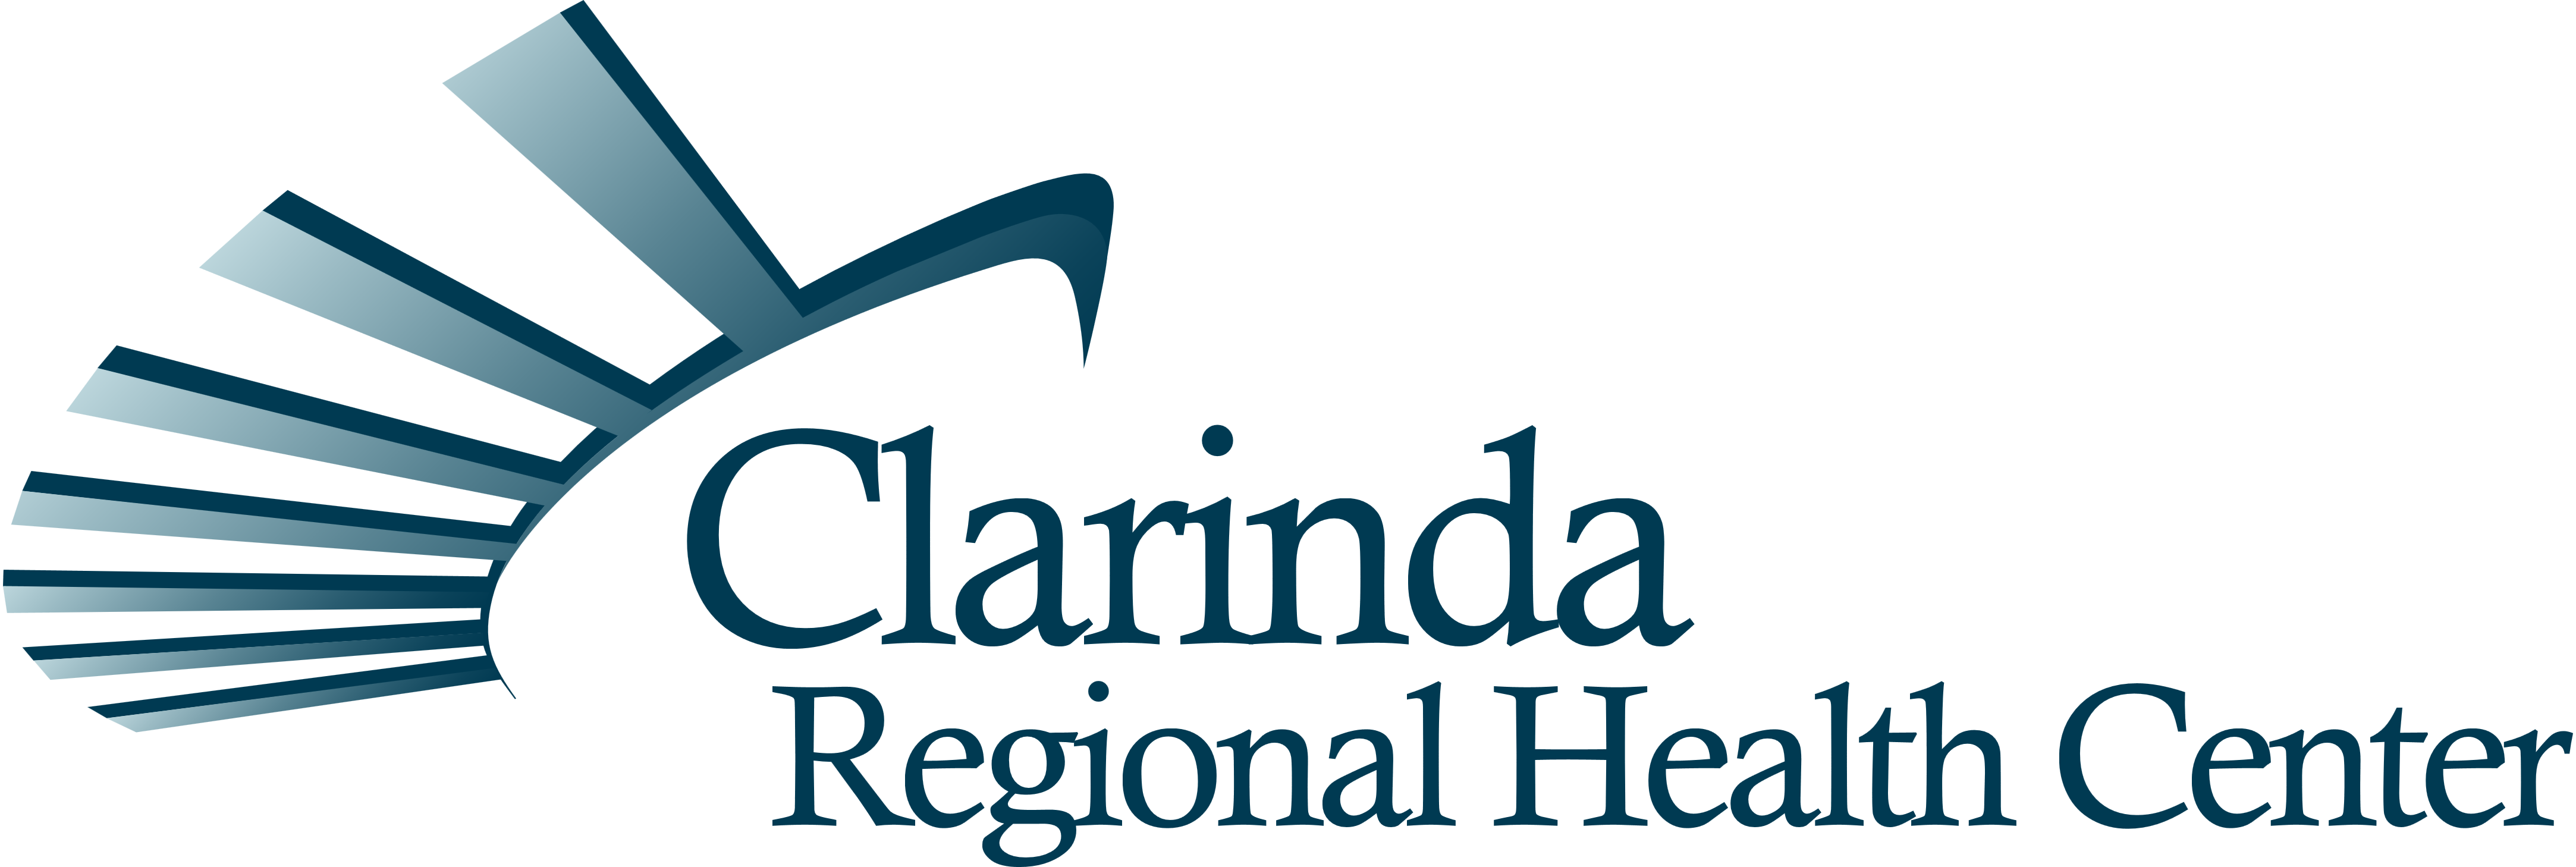 Clarinda Regional Health Center Logos Download